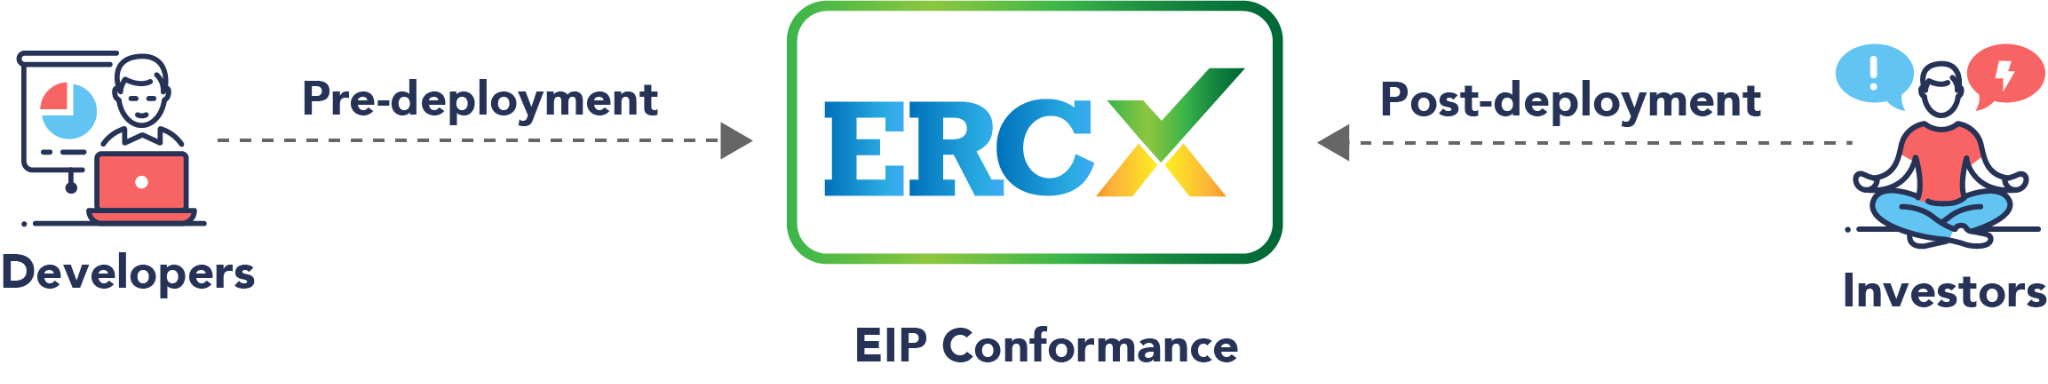 ERC-X image2